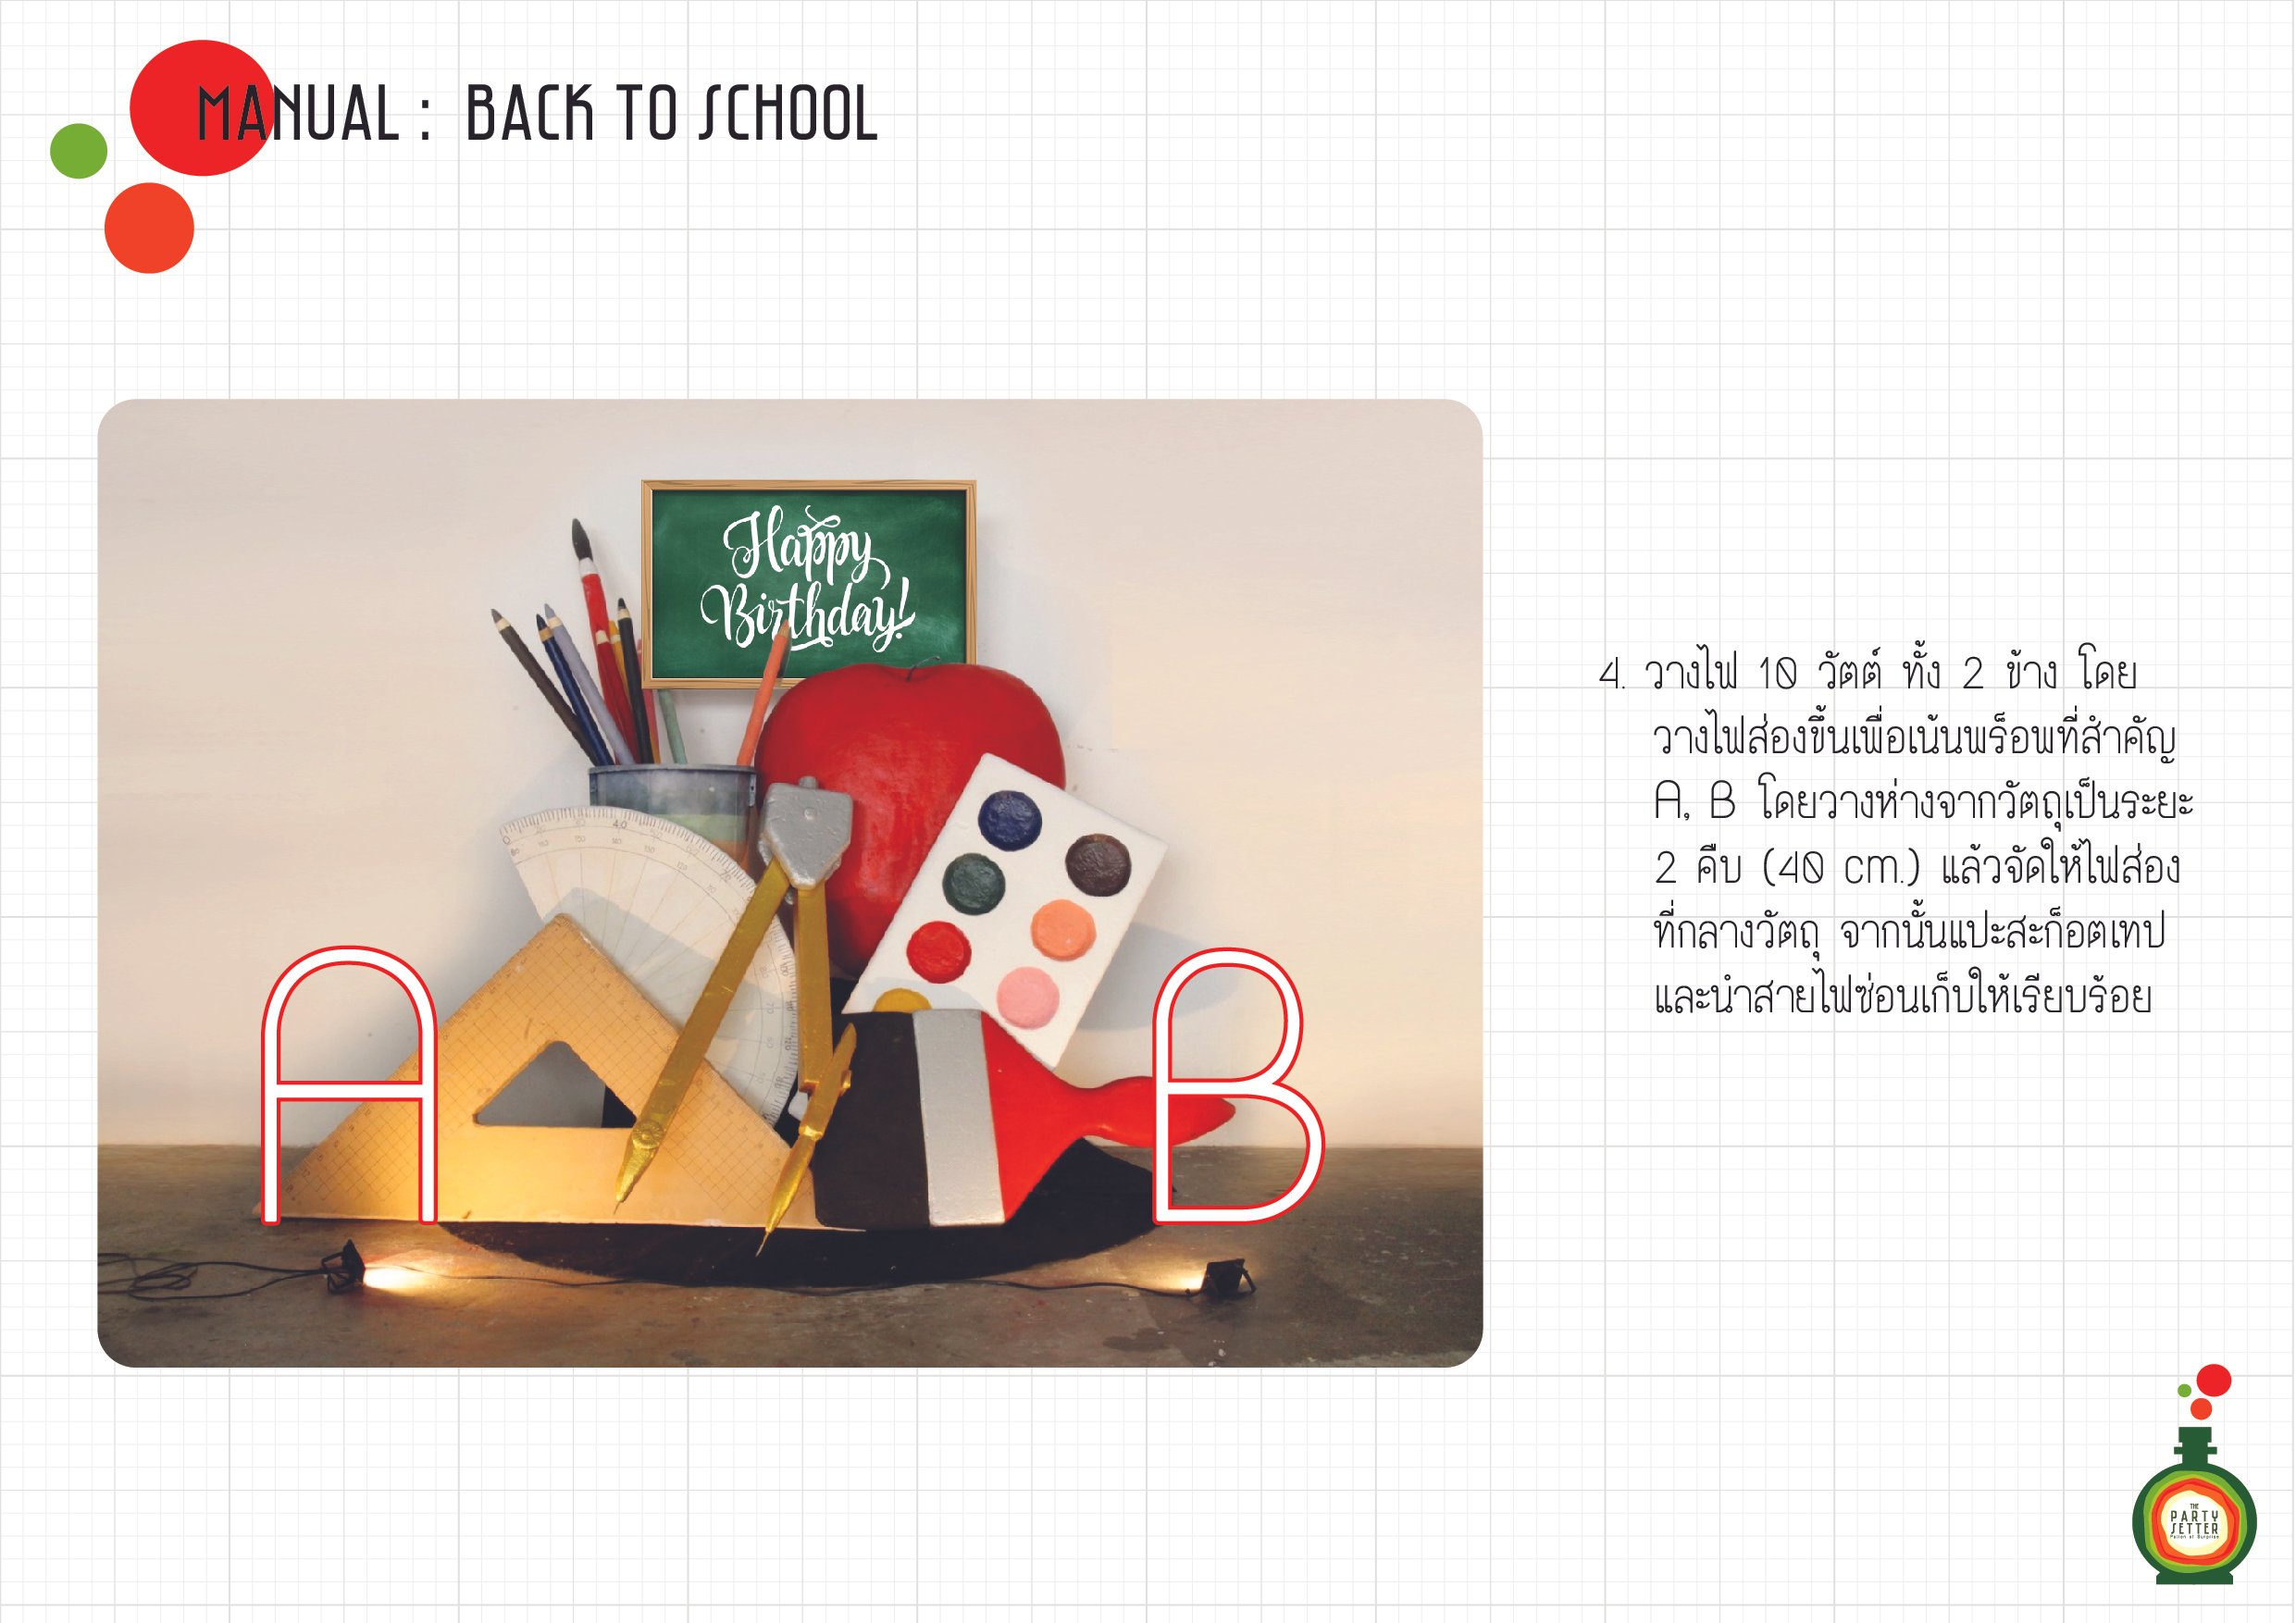 Manual_Back to School -4-04-01.jpg